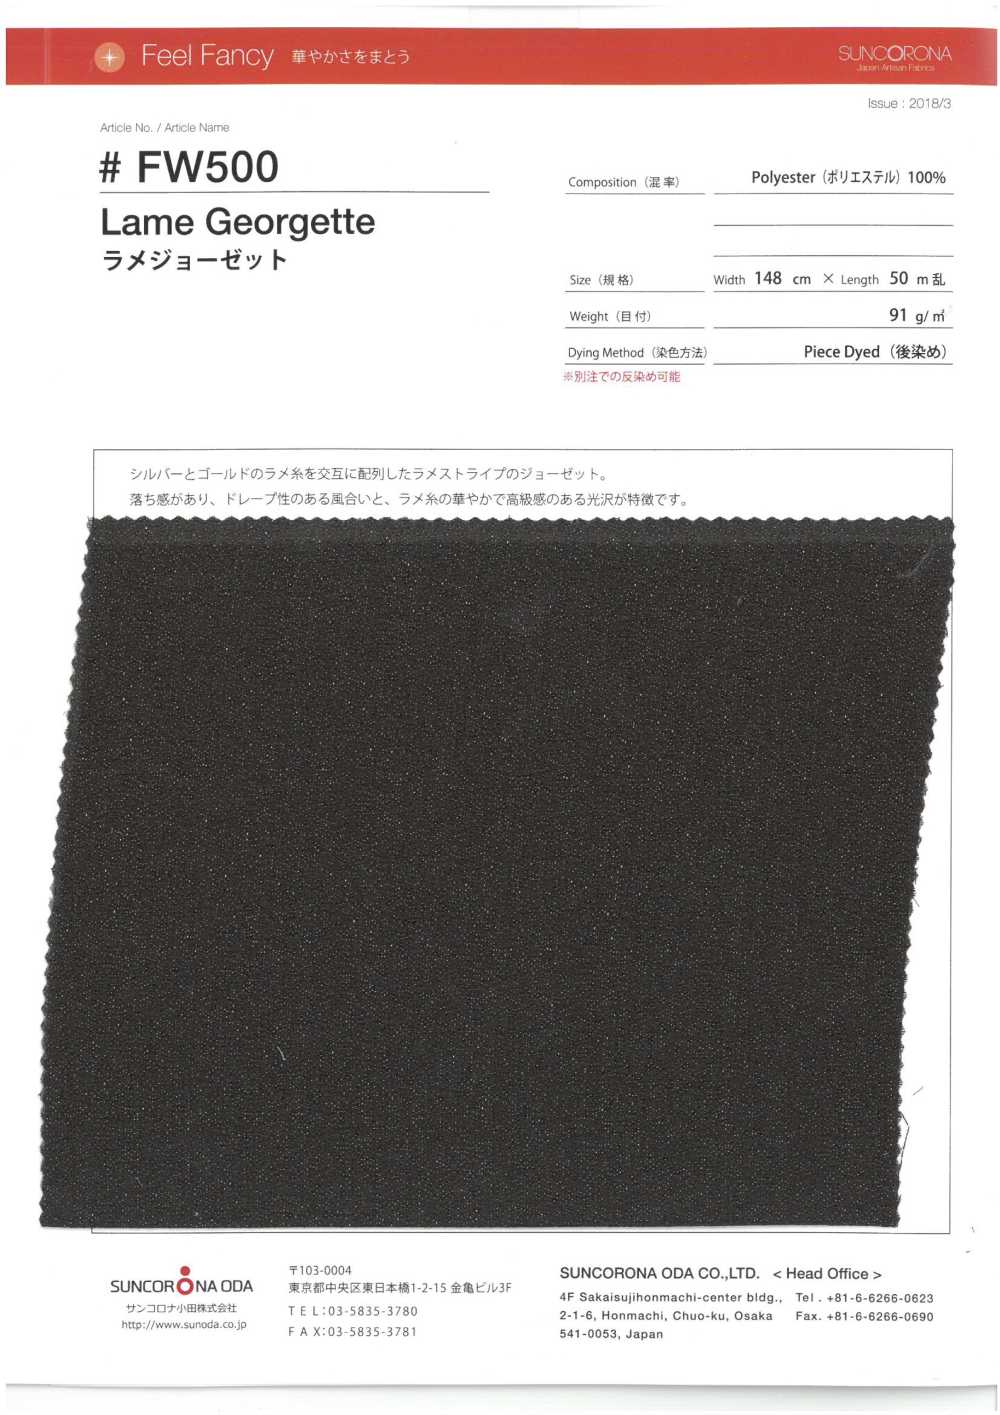 FW500 Lahme Georgette[Textilgewebe] Suncorona Oda